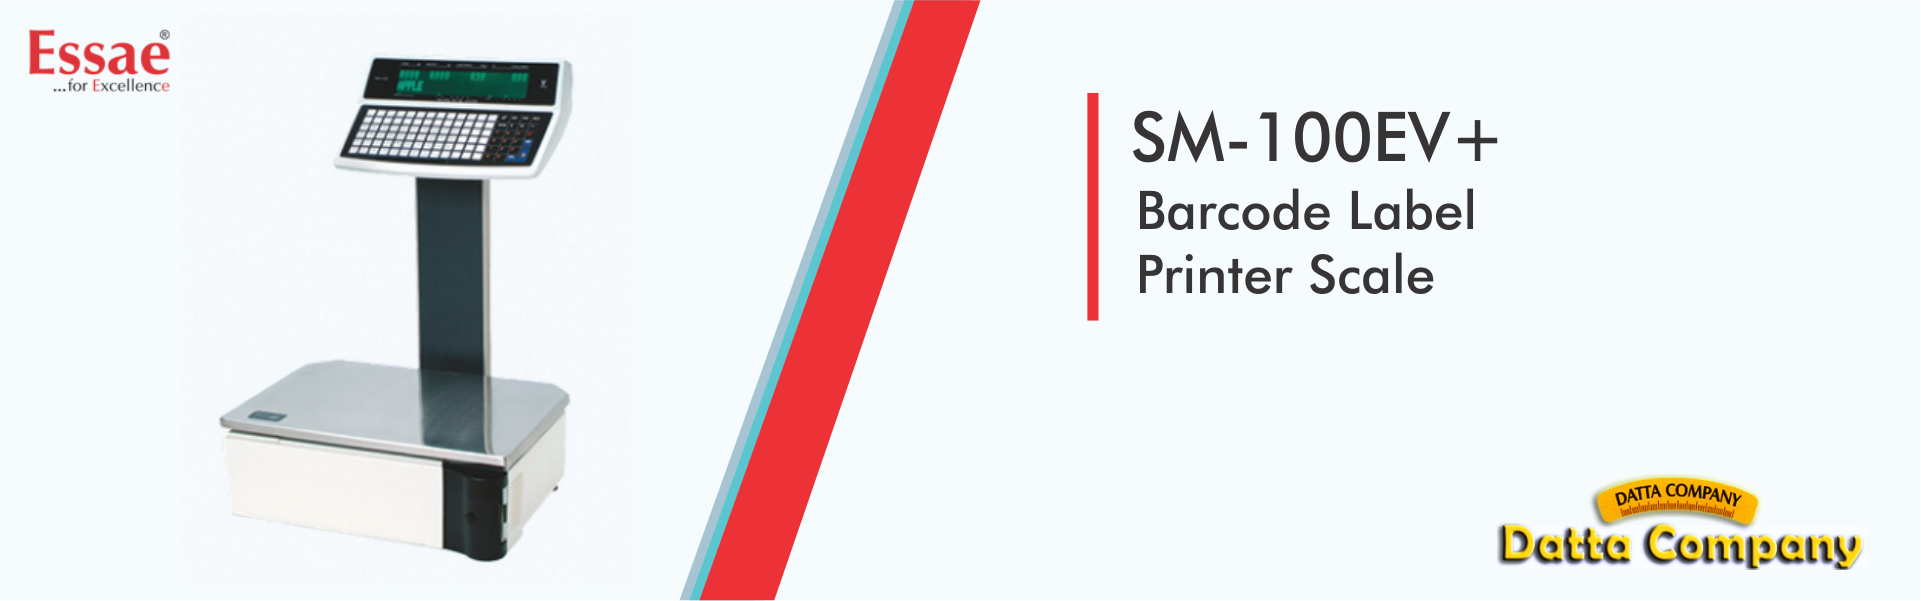 SM-100EV Barcode Label Printer Scale